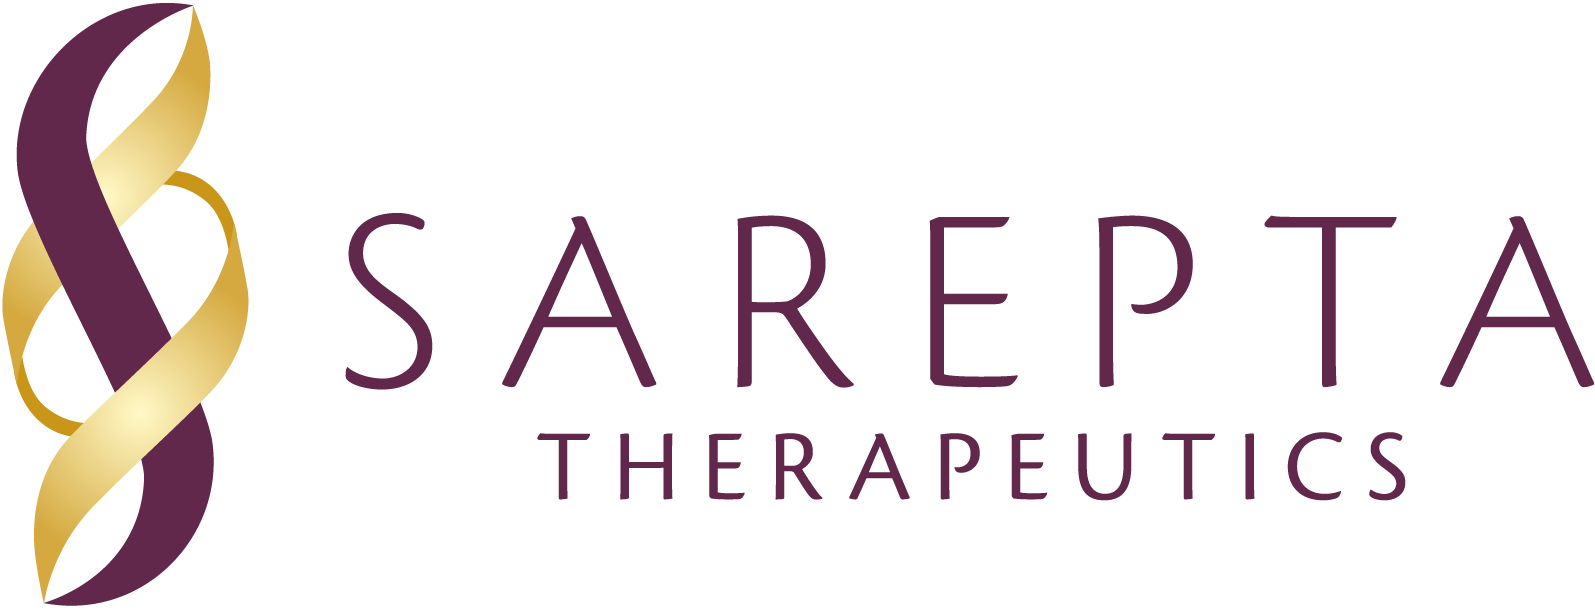 Sarepta Therapeutics Logo png